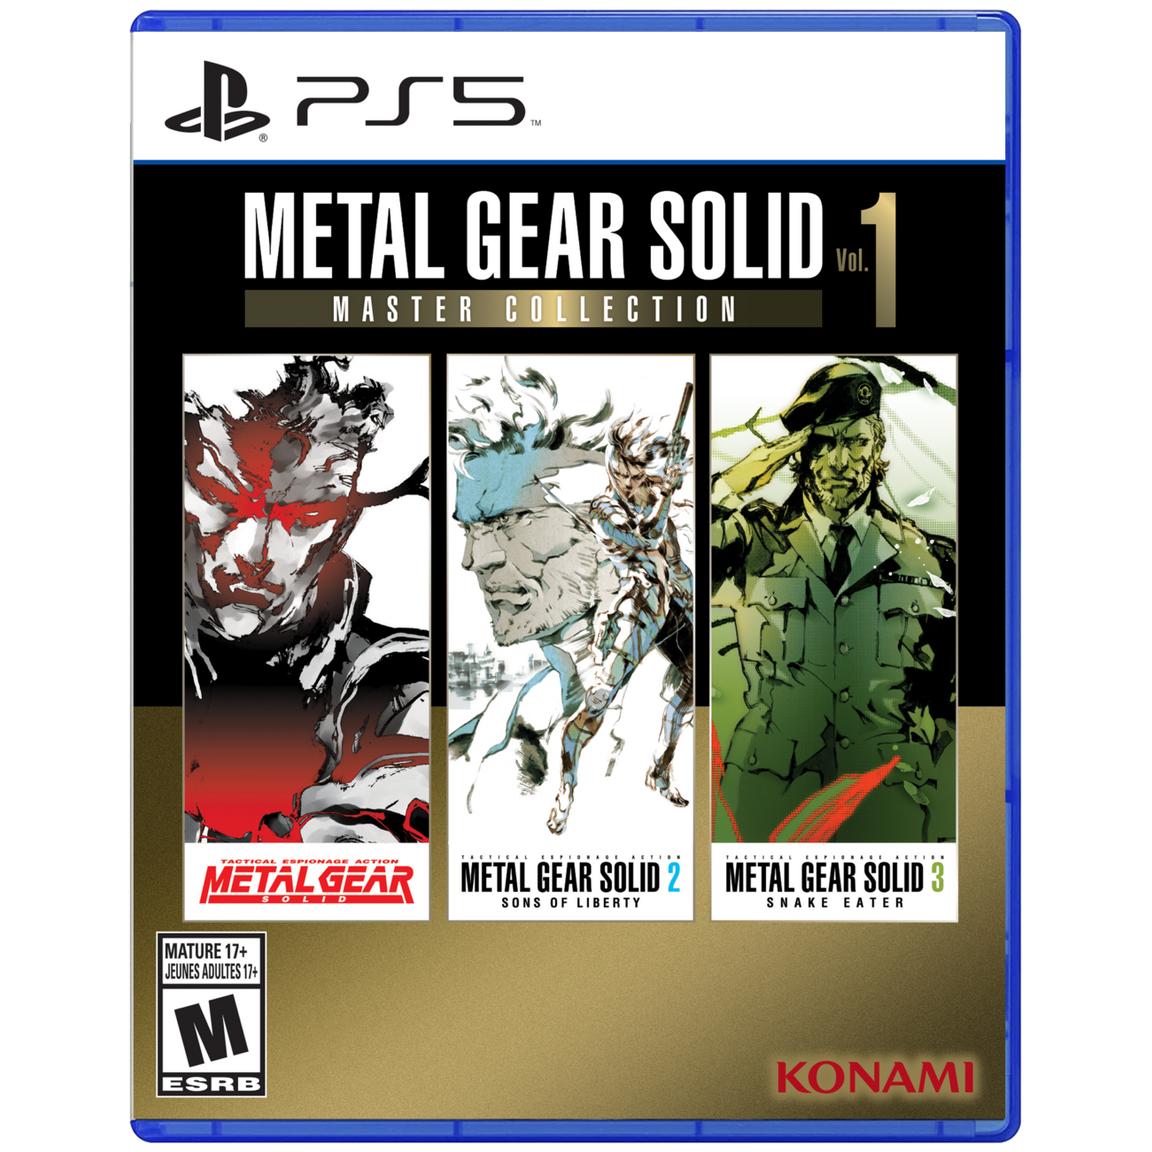 Видеоигра Metal Gear Solid: Master Collection Vol.1 - PlayStation 5 metal gear solid master collection vol 1 metal gear solid 2 sons of liberty steam pc регион активации евросоюз